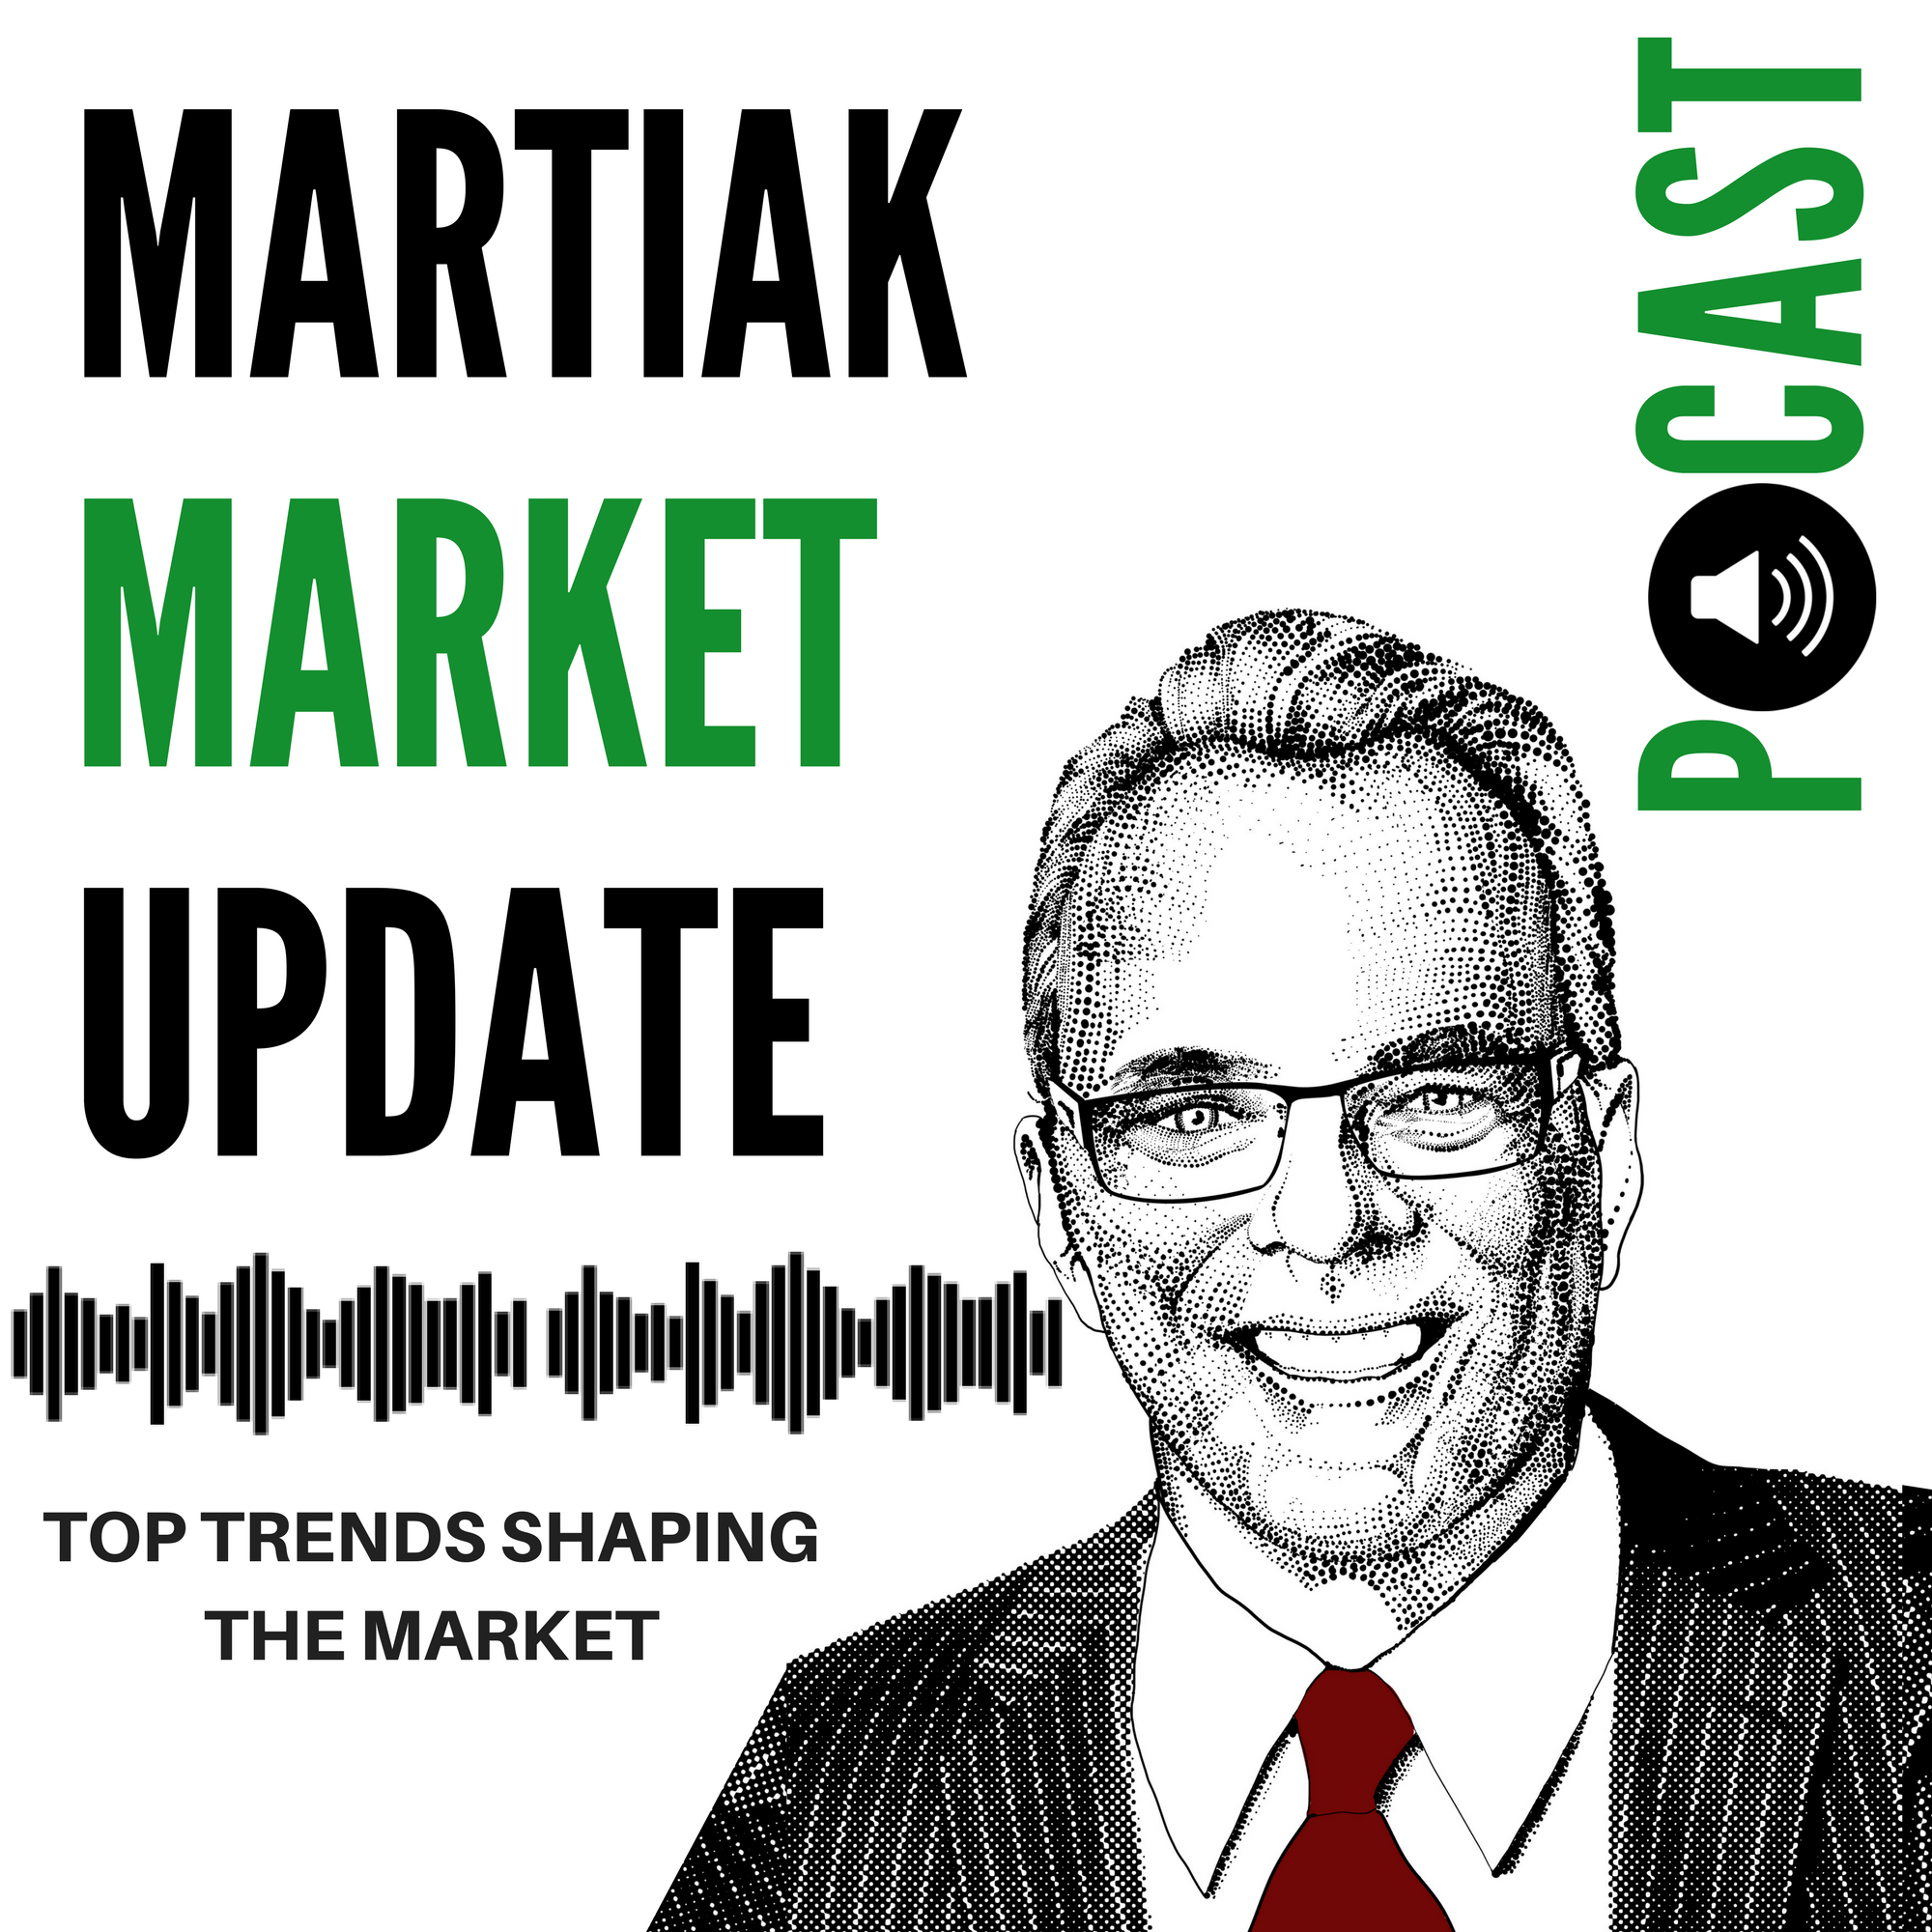 Martiak Market Update